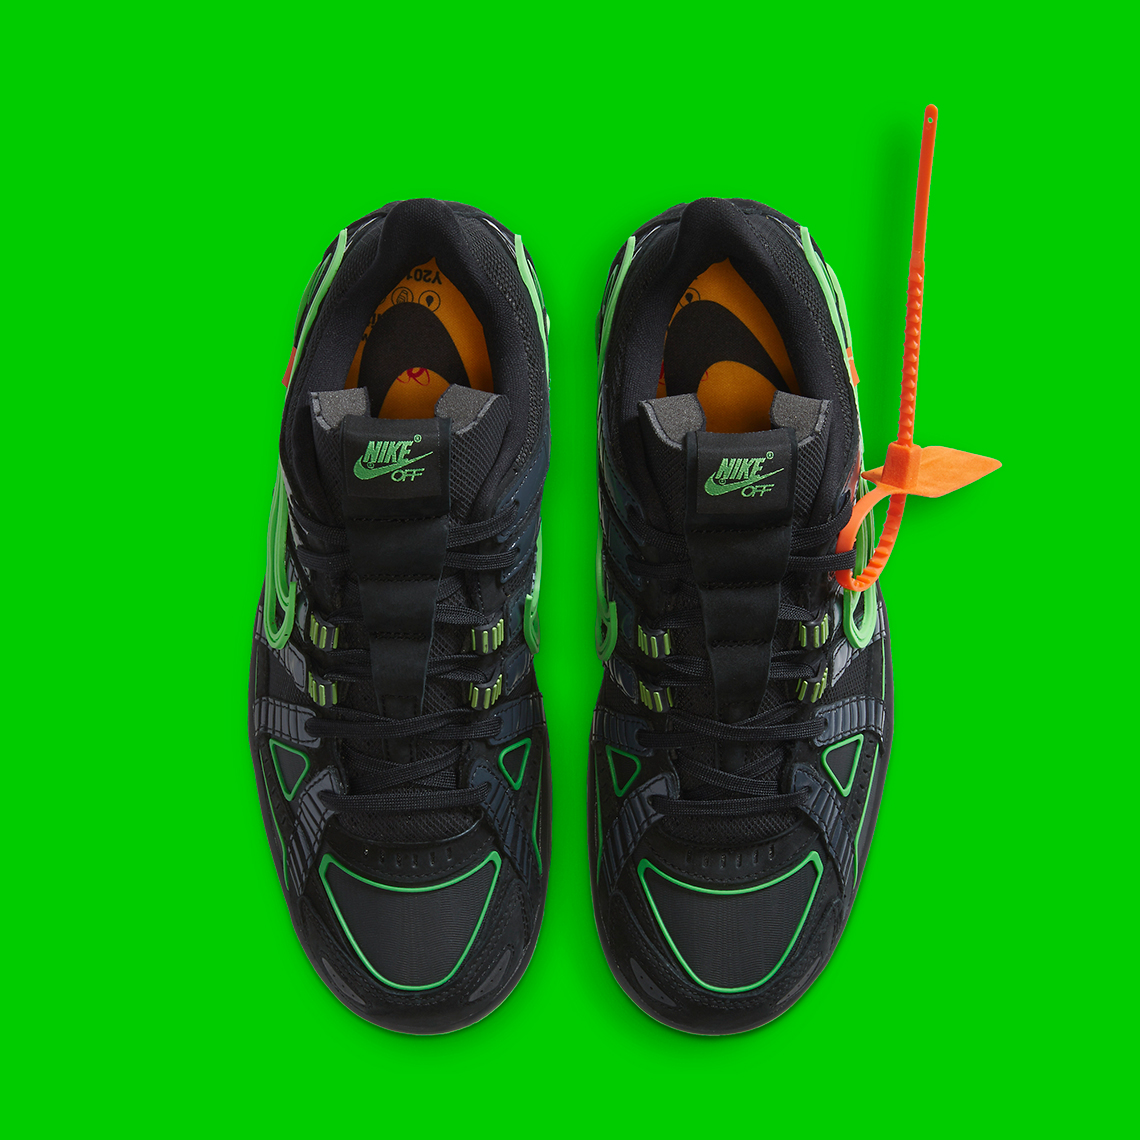 Nike x Off White Toddler Rubber Dunk - Green Strike / Black